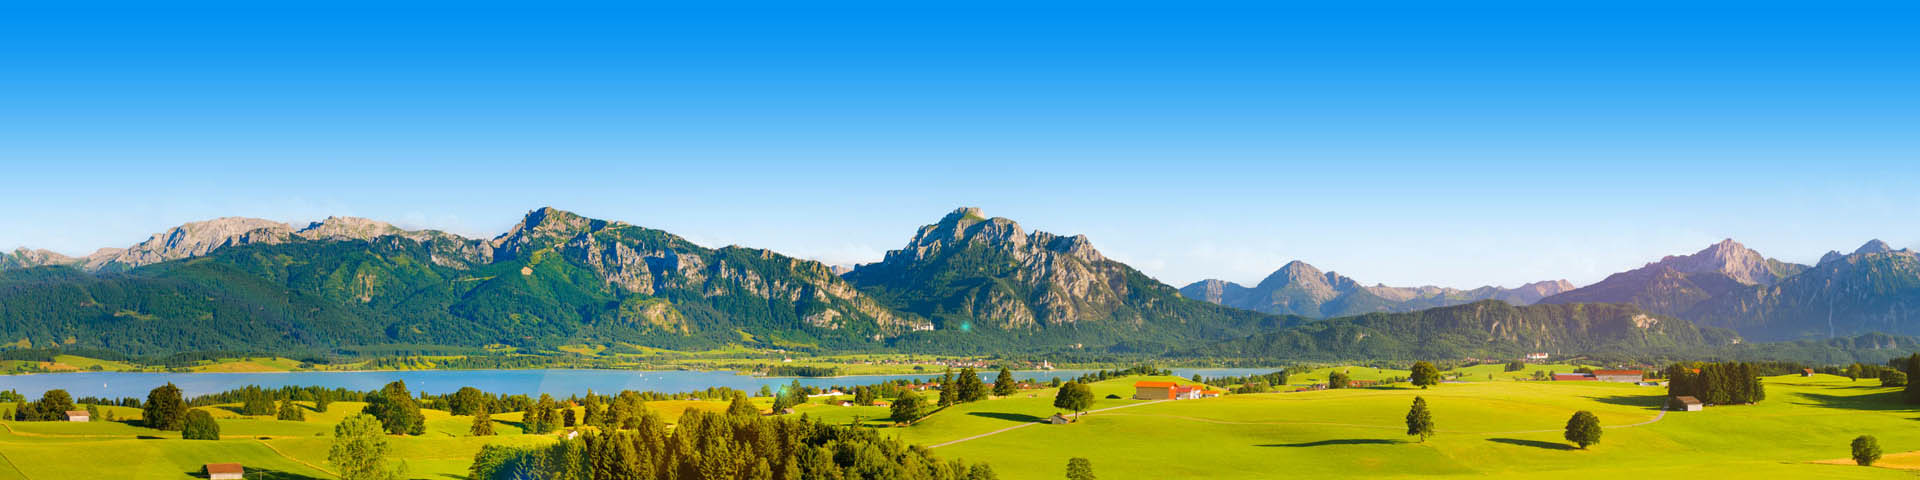 Prachtige omgeving en groene natuur in Duitsland